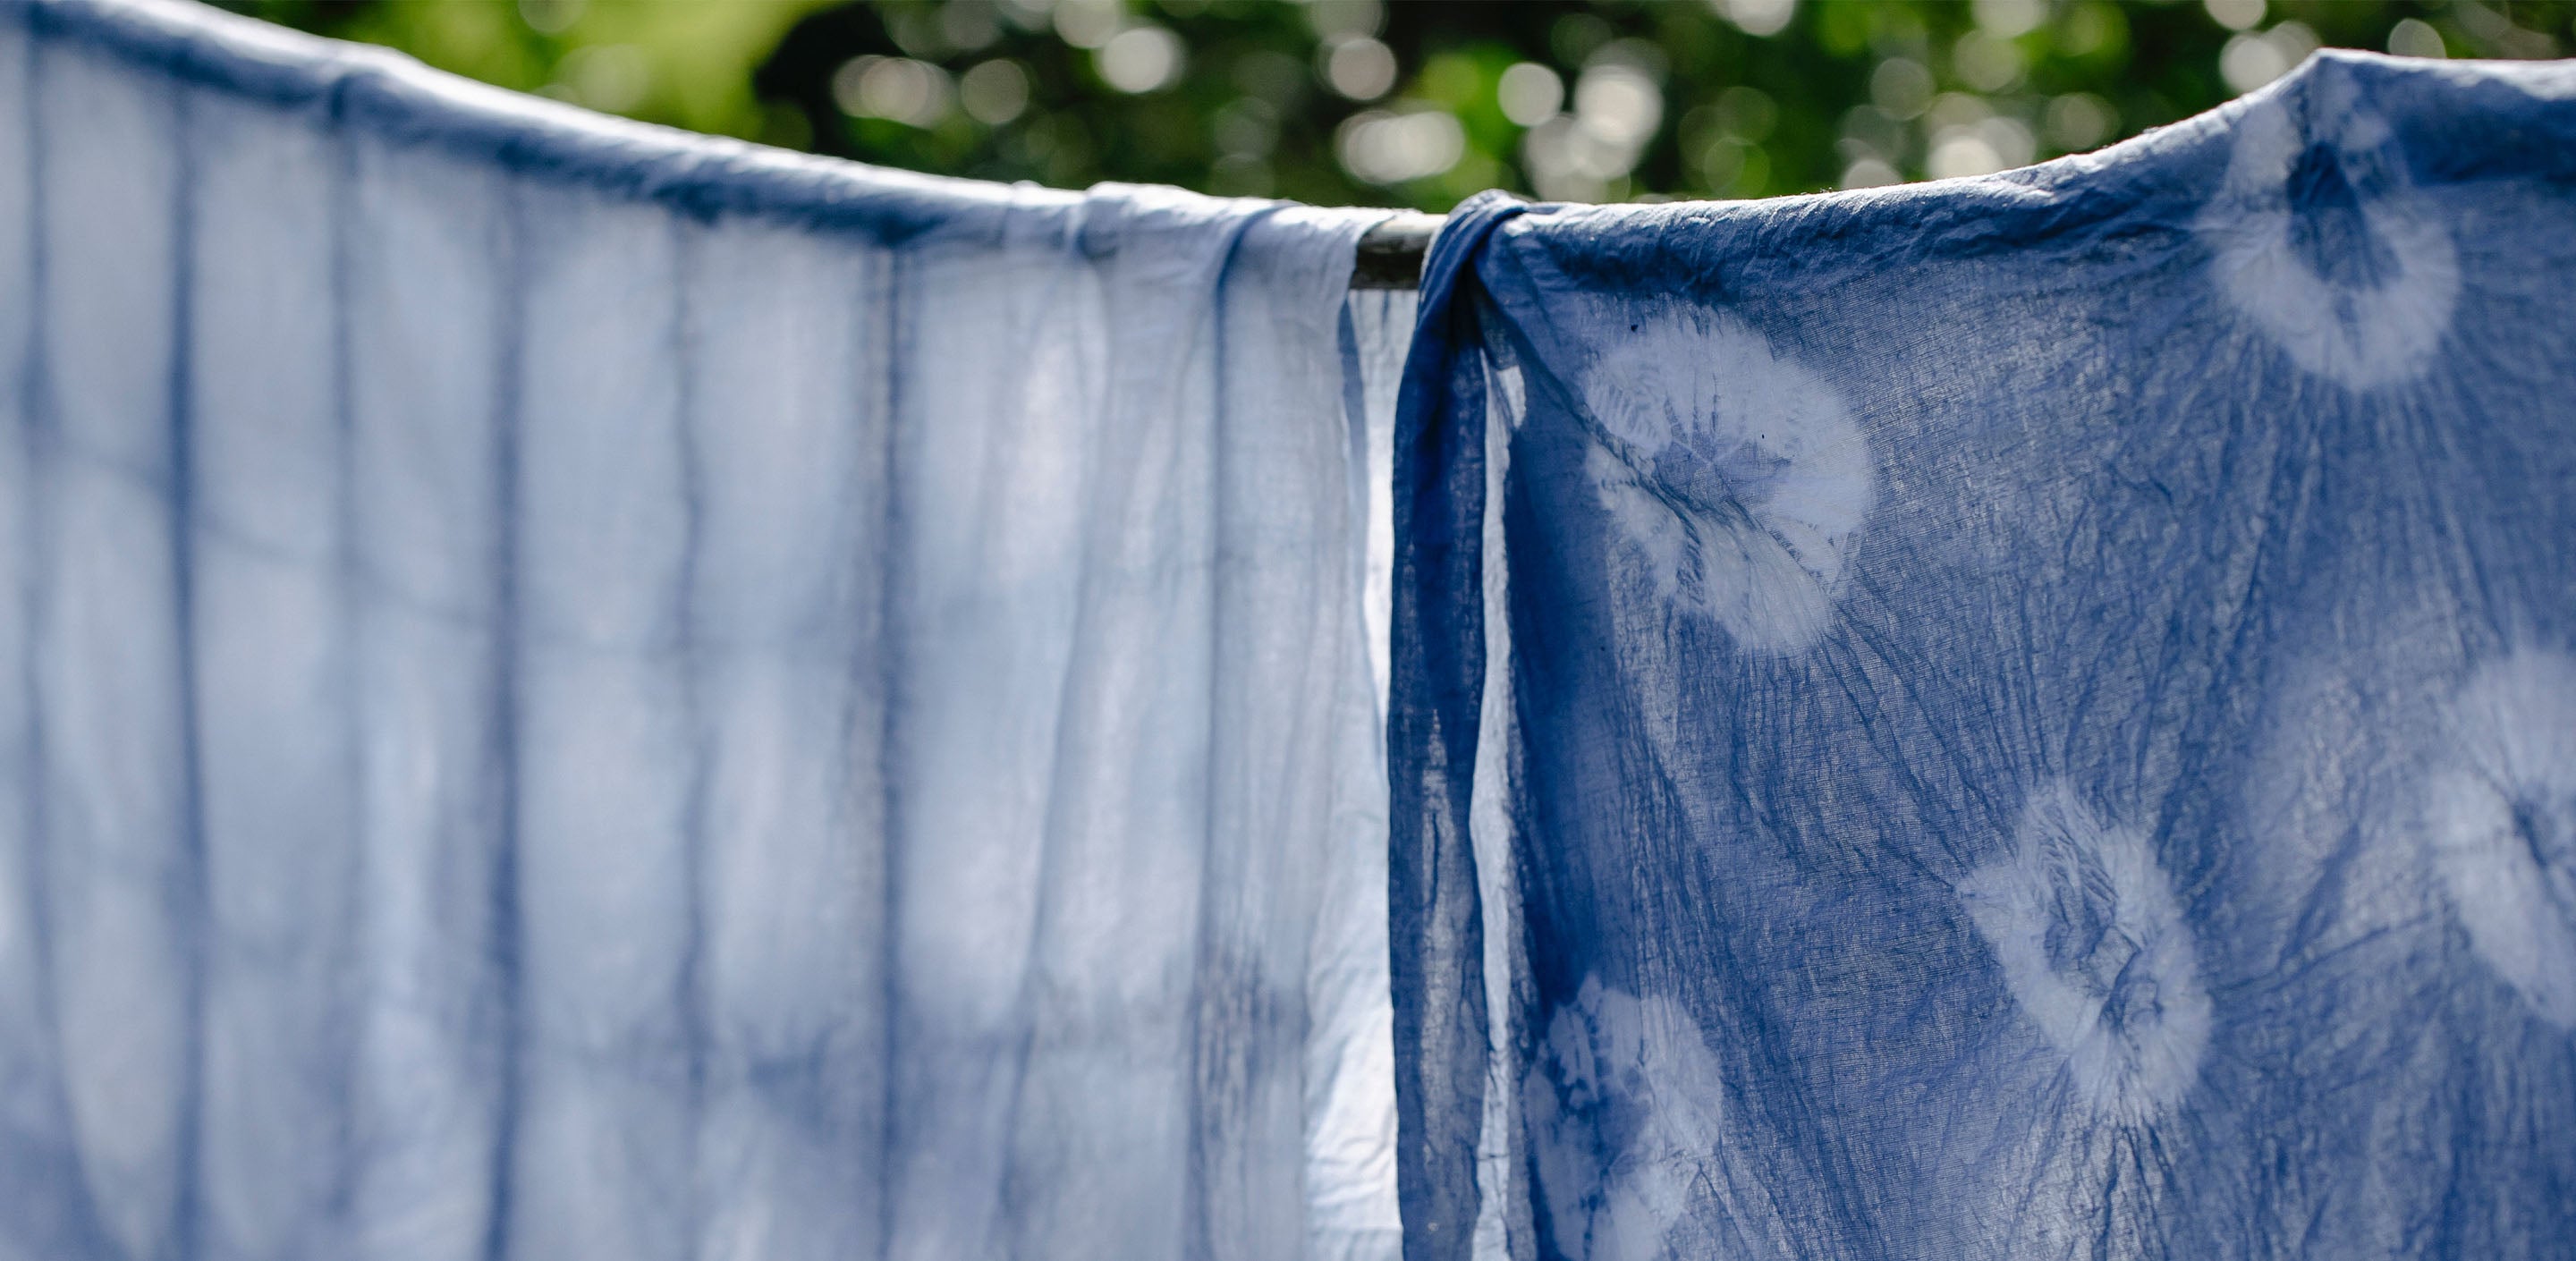 tissu en soie bleu etendu apres lavage